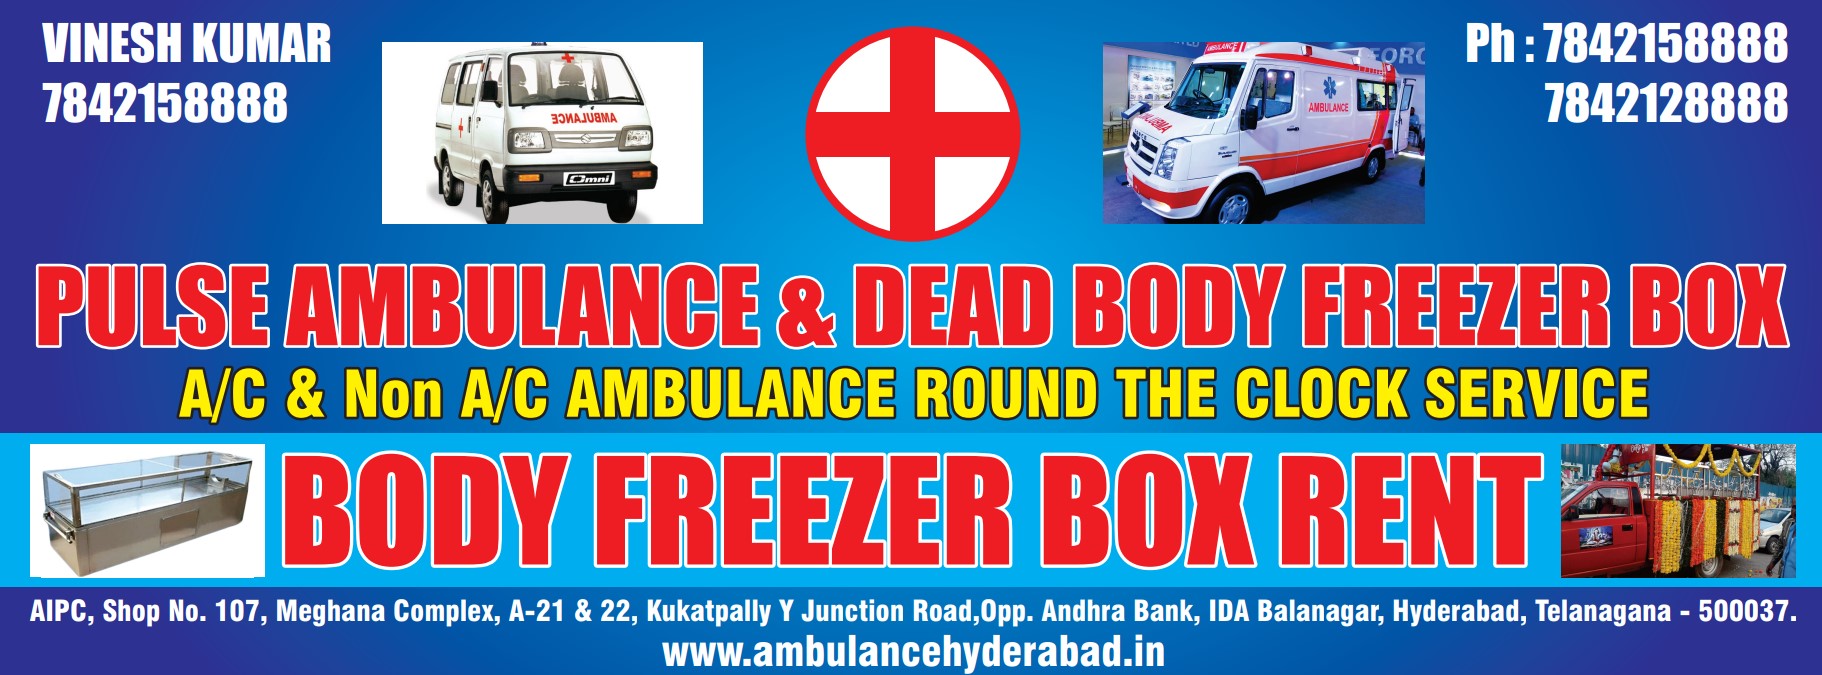 Ambulance Service In Kakatiya Nagar Call Us +91 7842158888